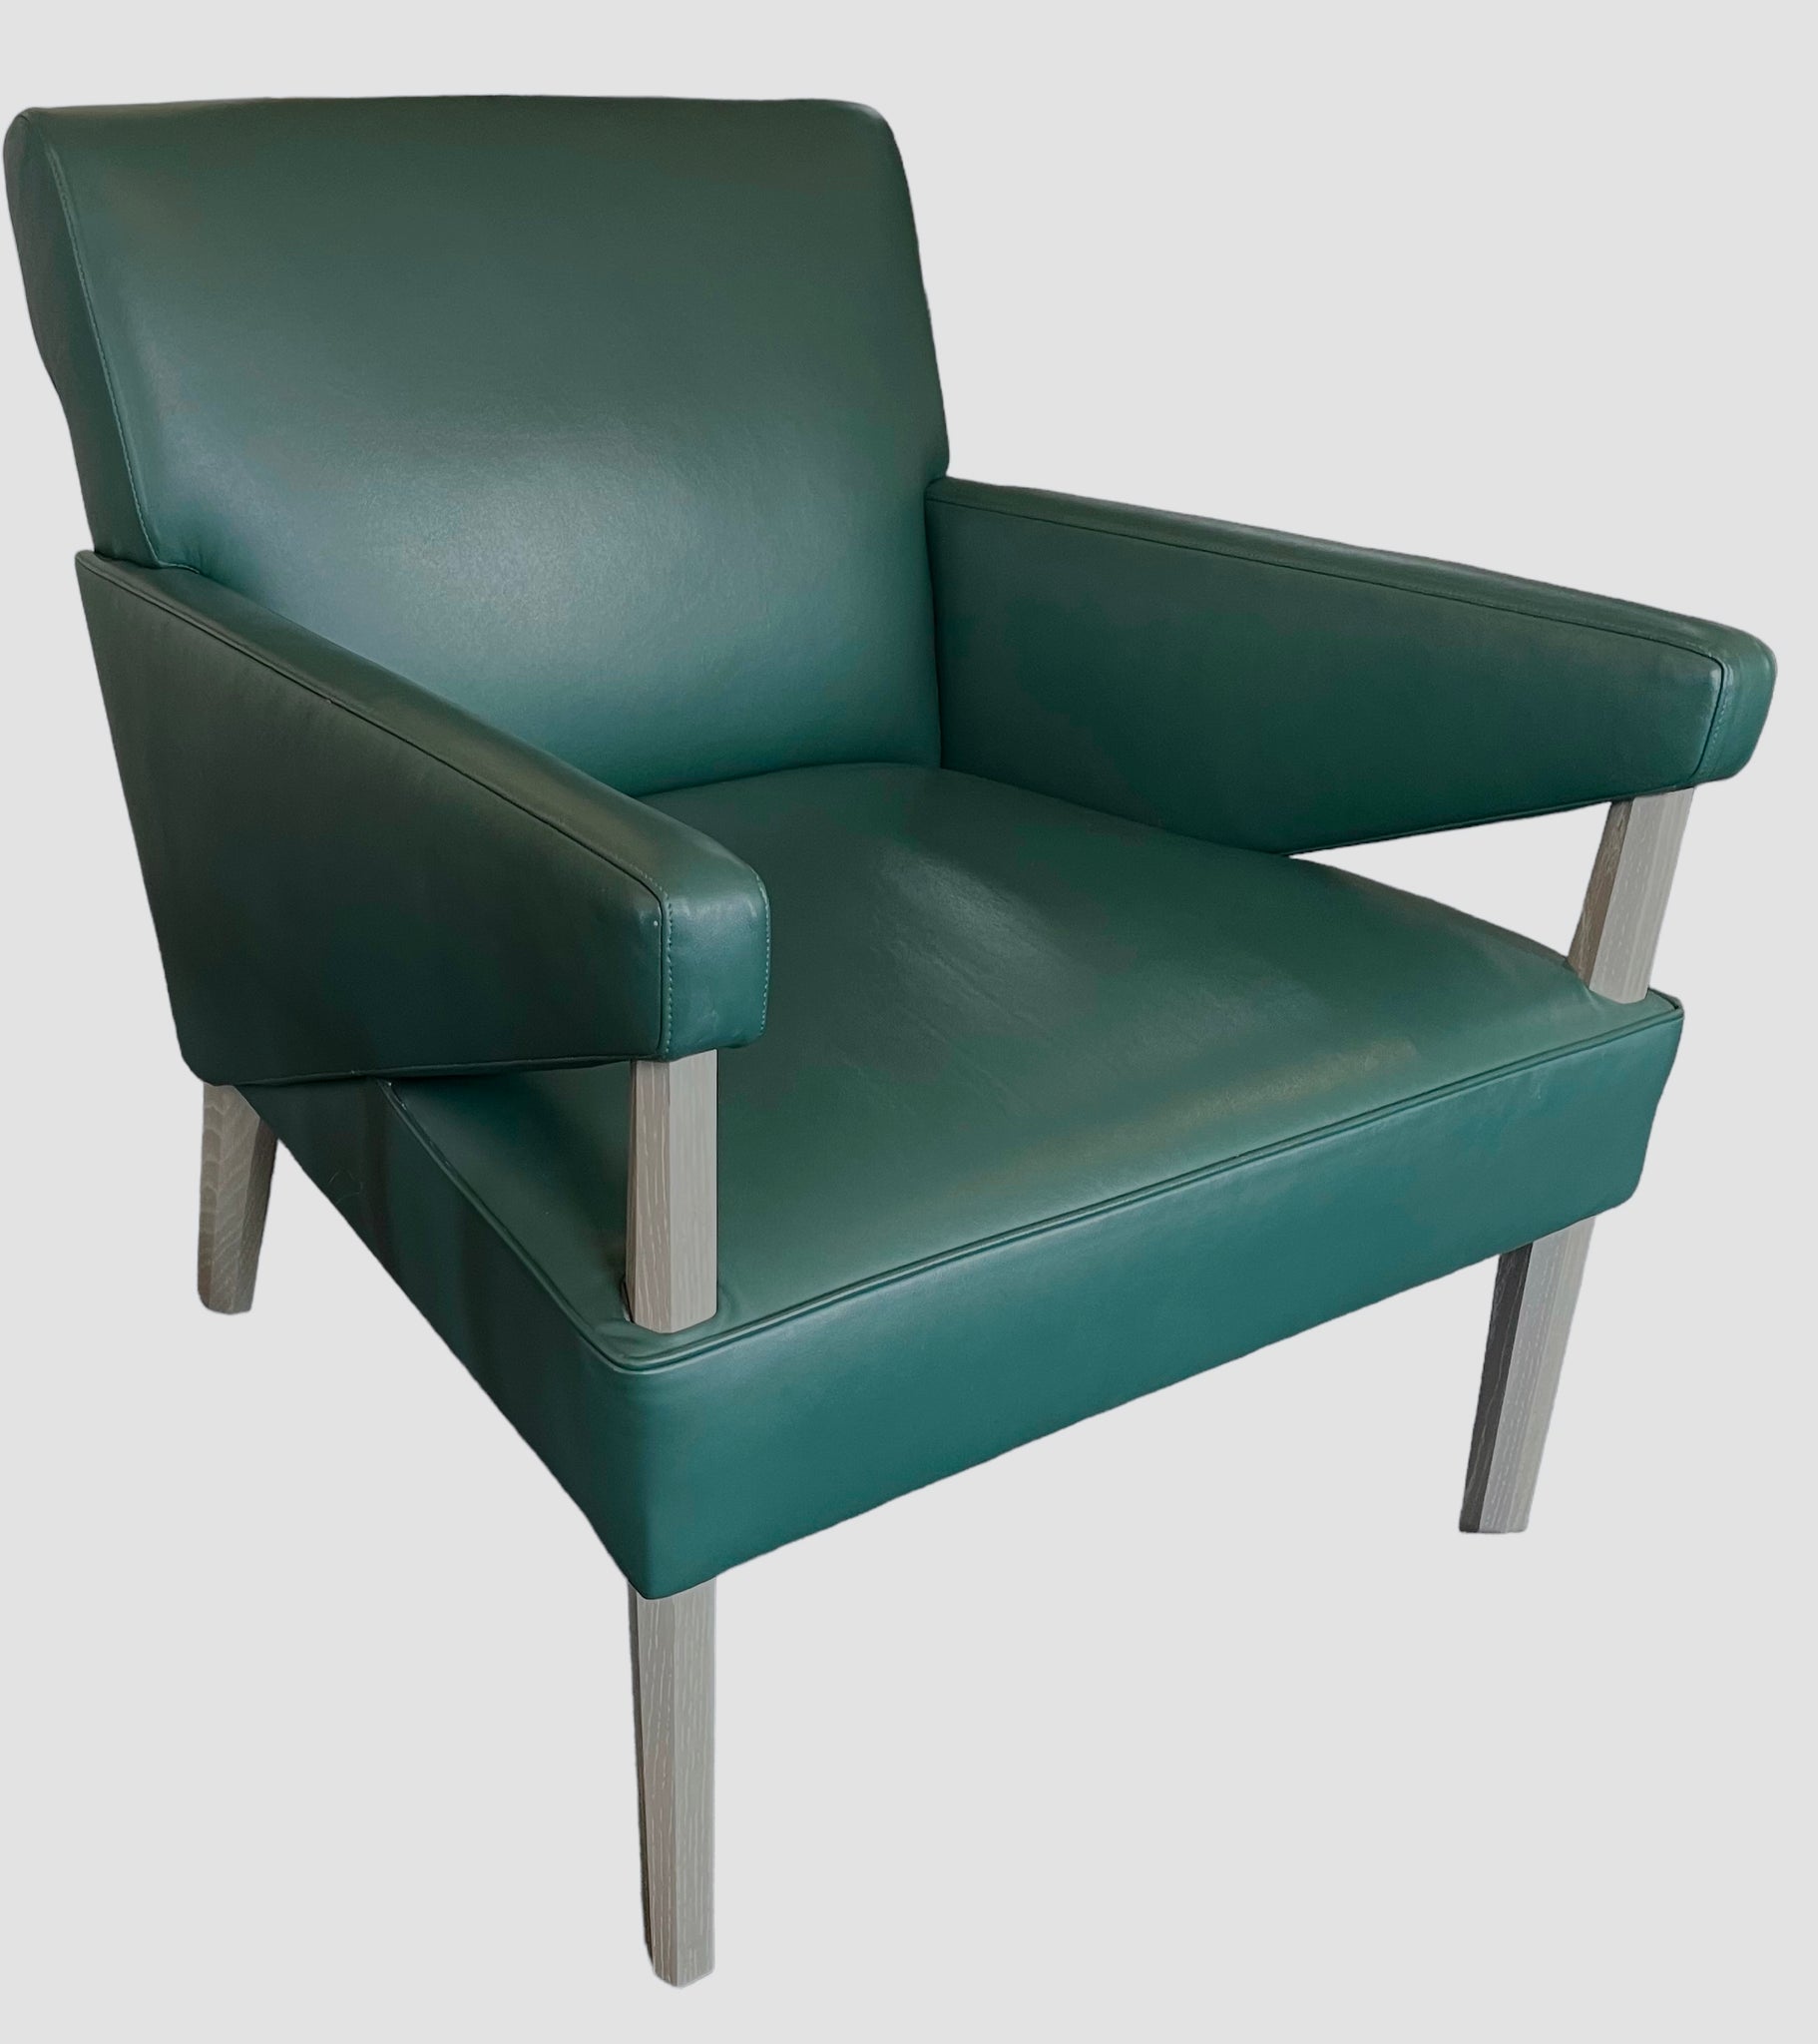 Pair of Custom Leather Mid Century Modern Chairs.